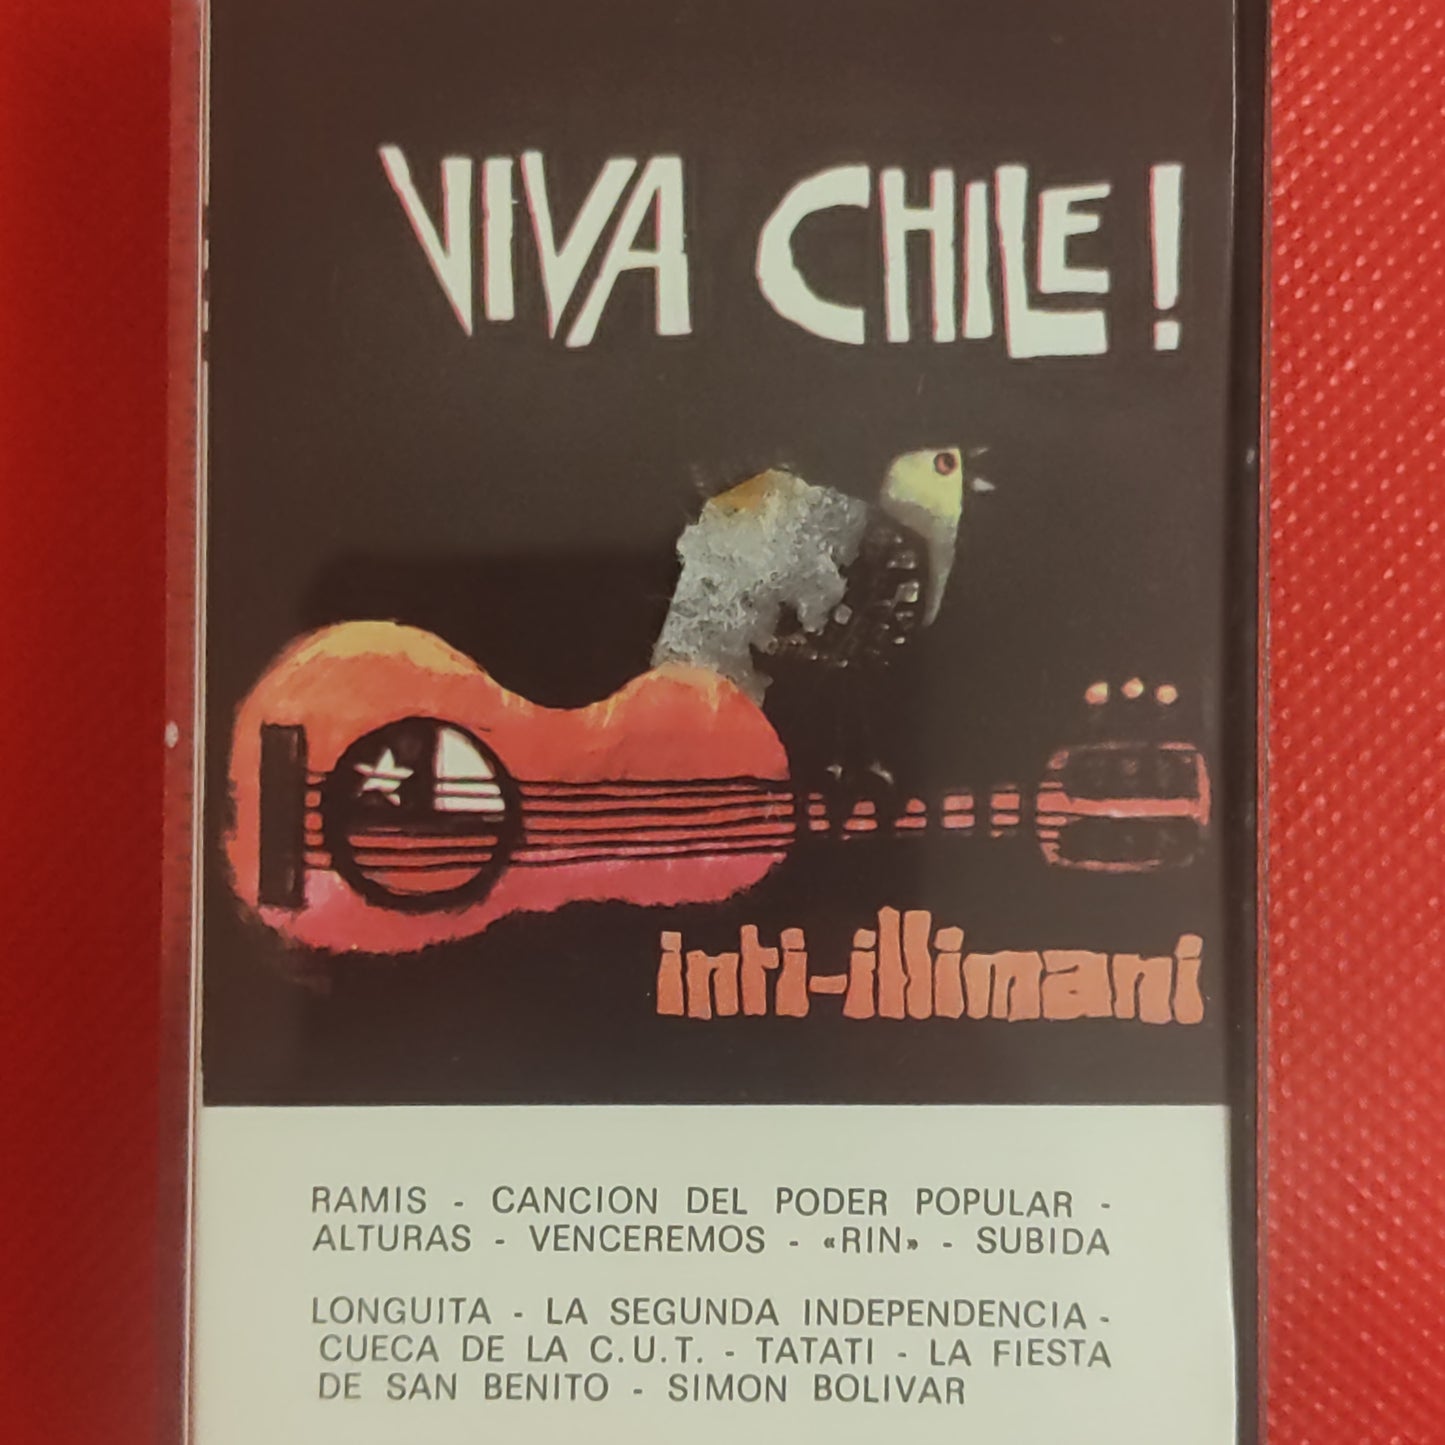 INTI-ILLMANI - Viva Chile !